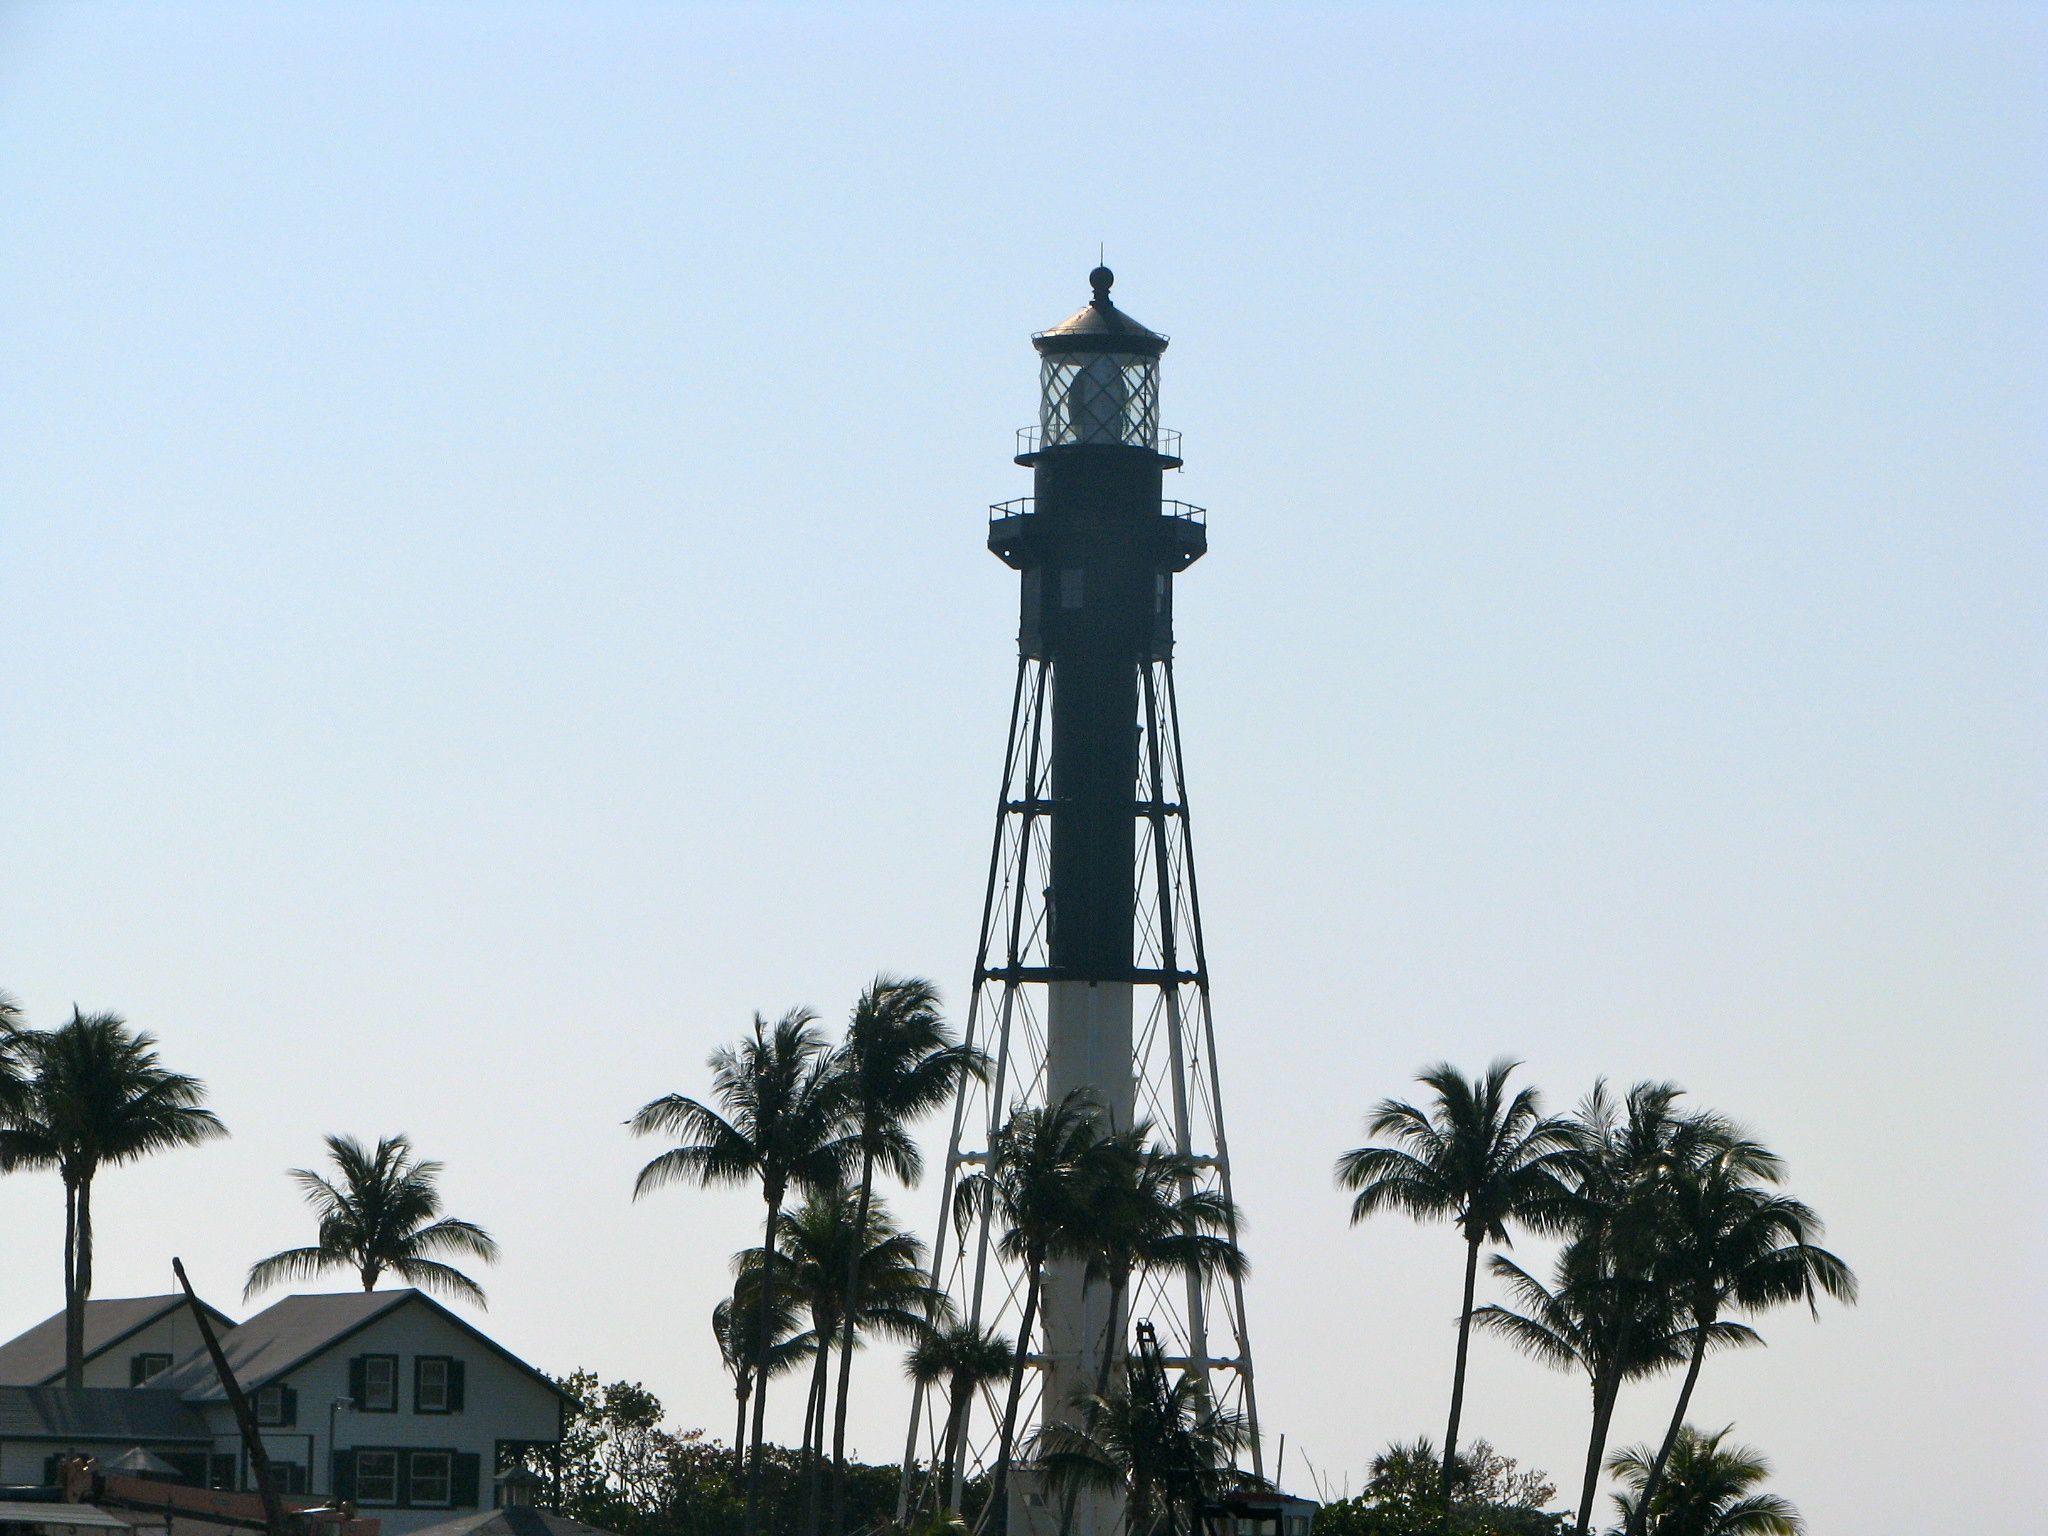 The Lighthouse at Pompano Beach